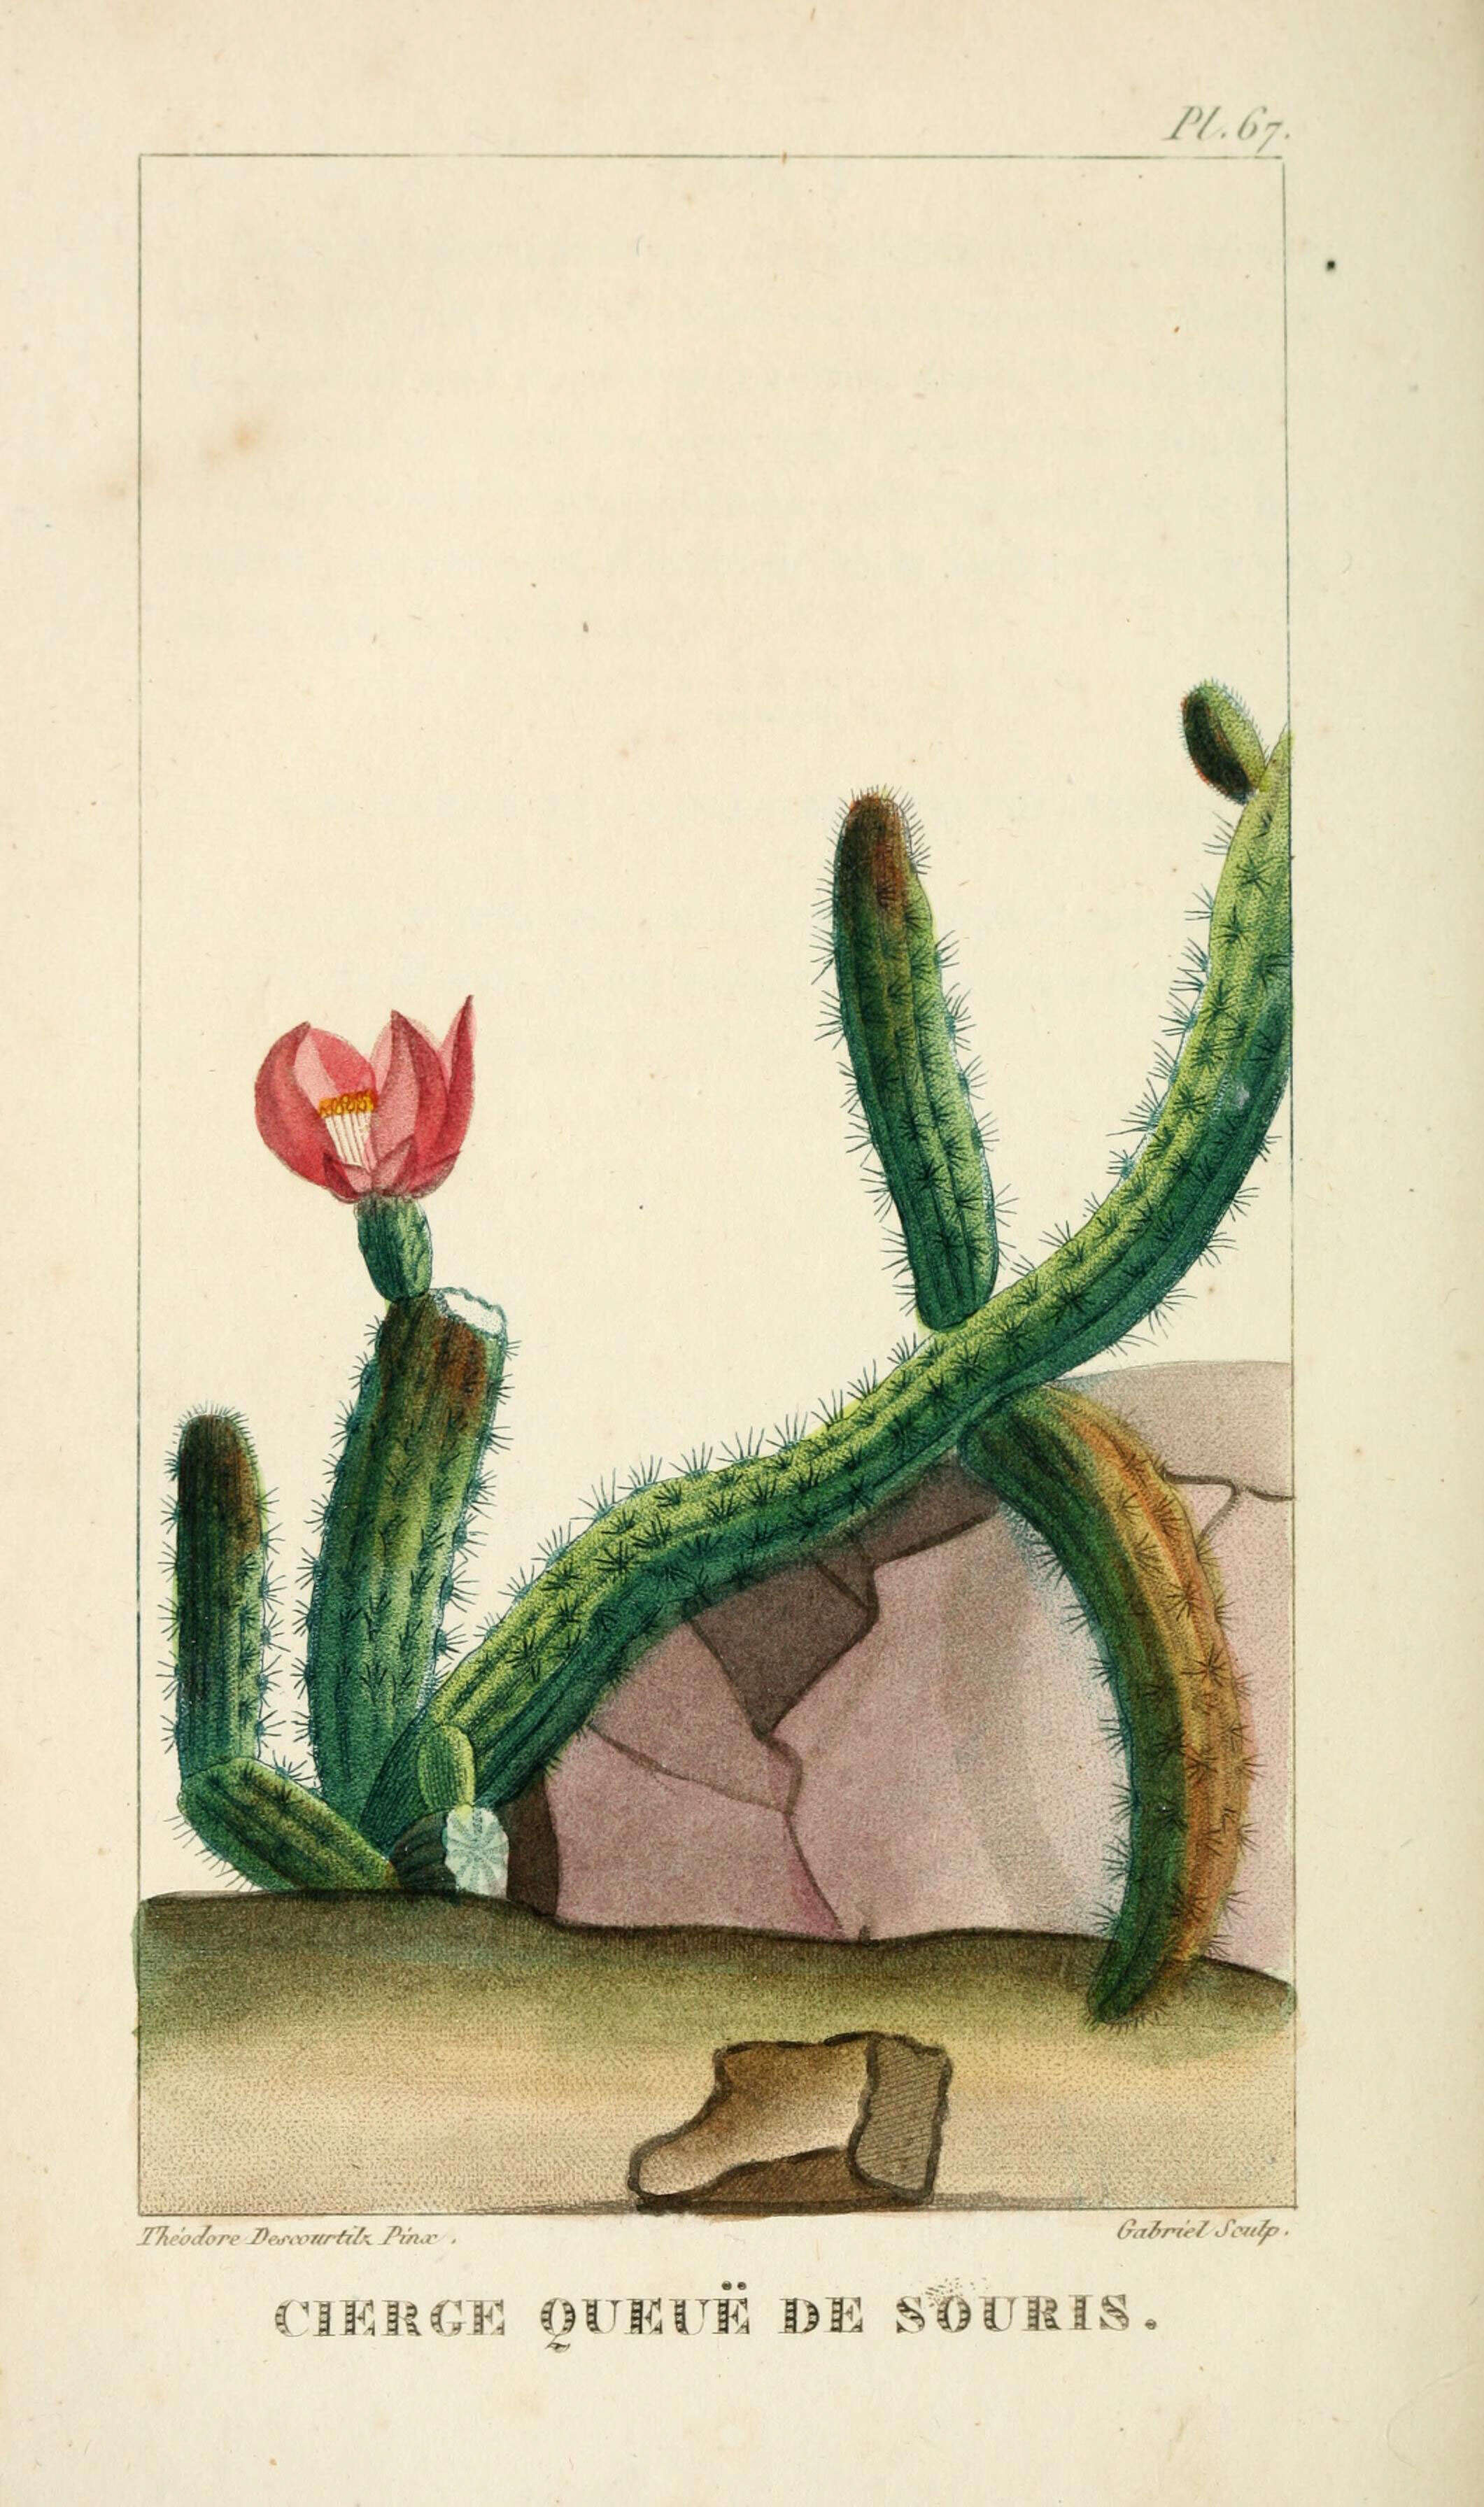 Image of rat-tail cactus